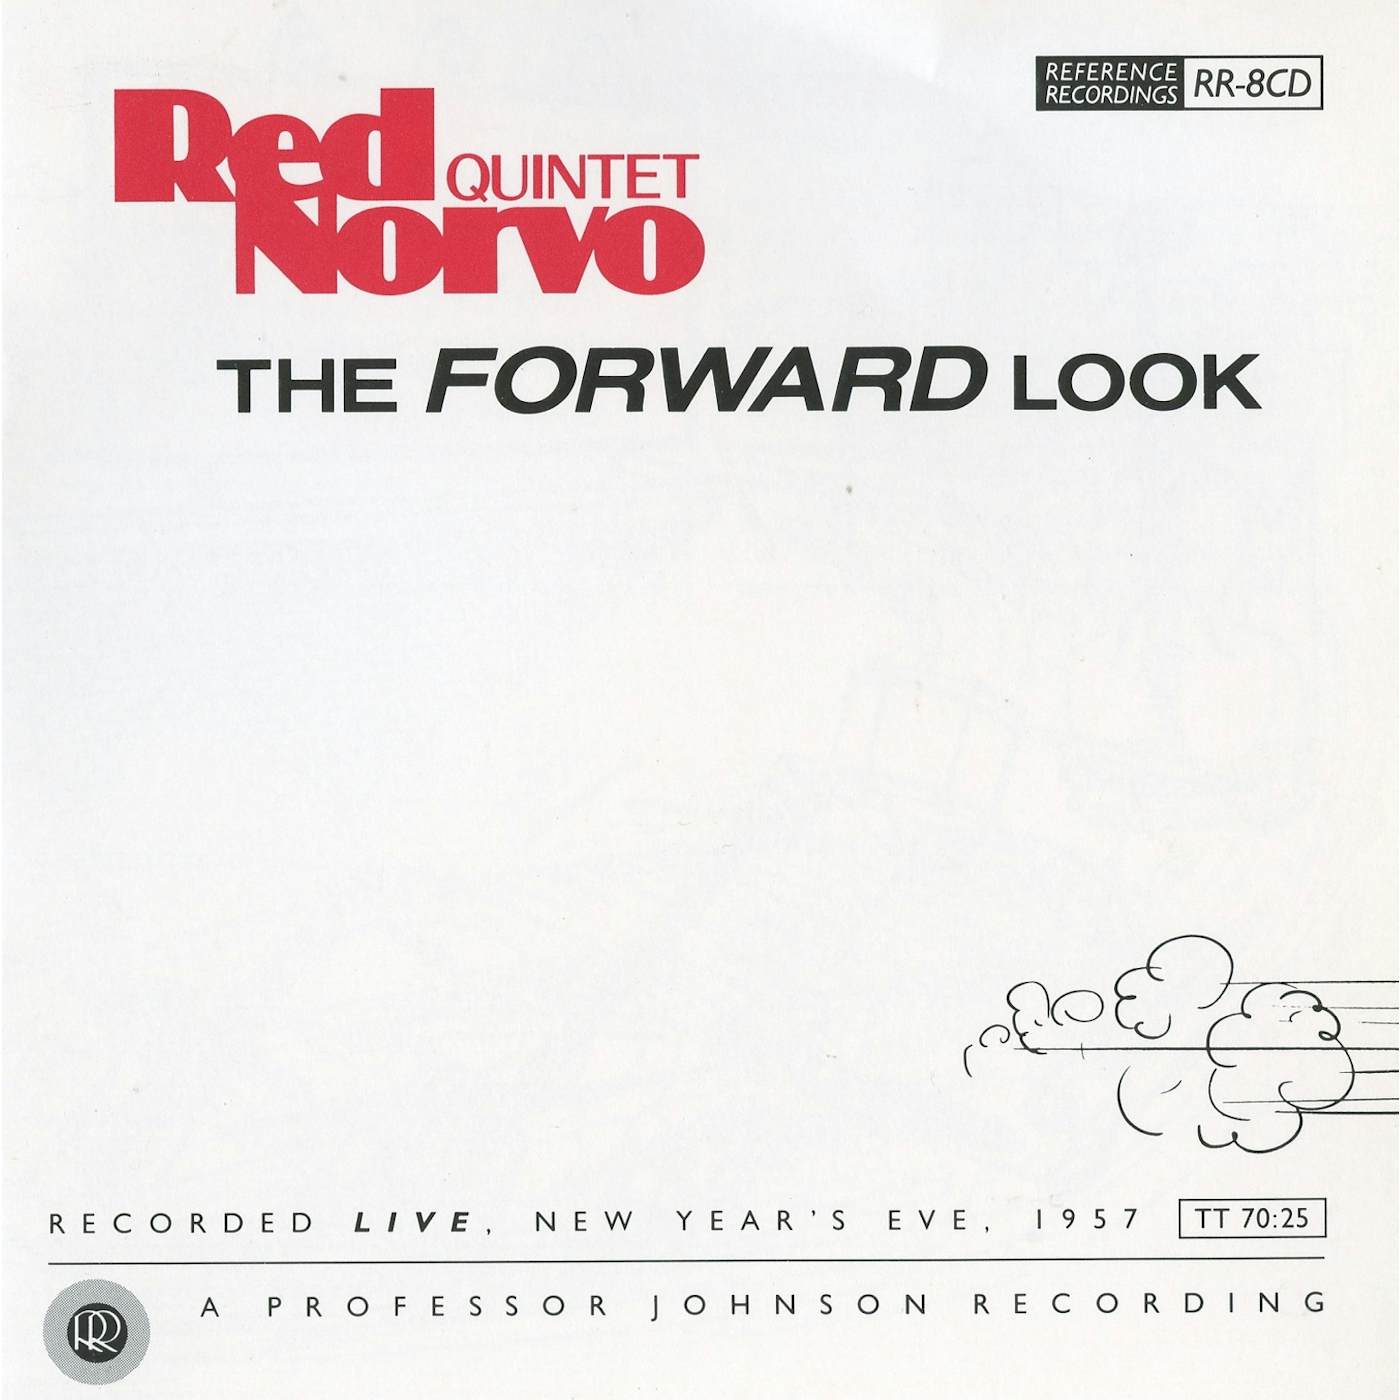 Red Norvo FORWARD LOOK CD